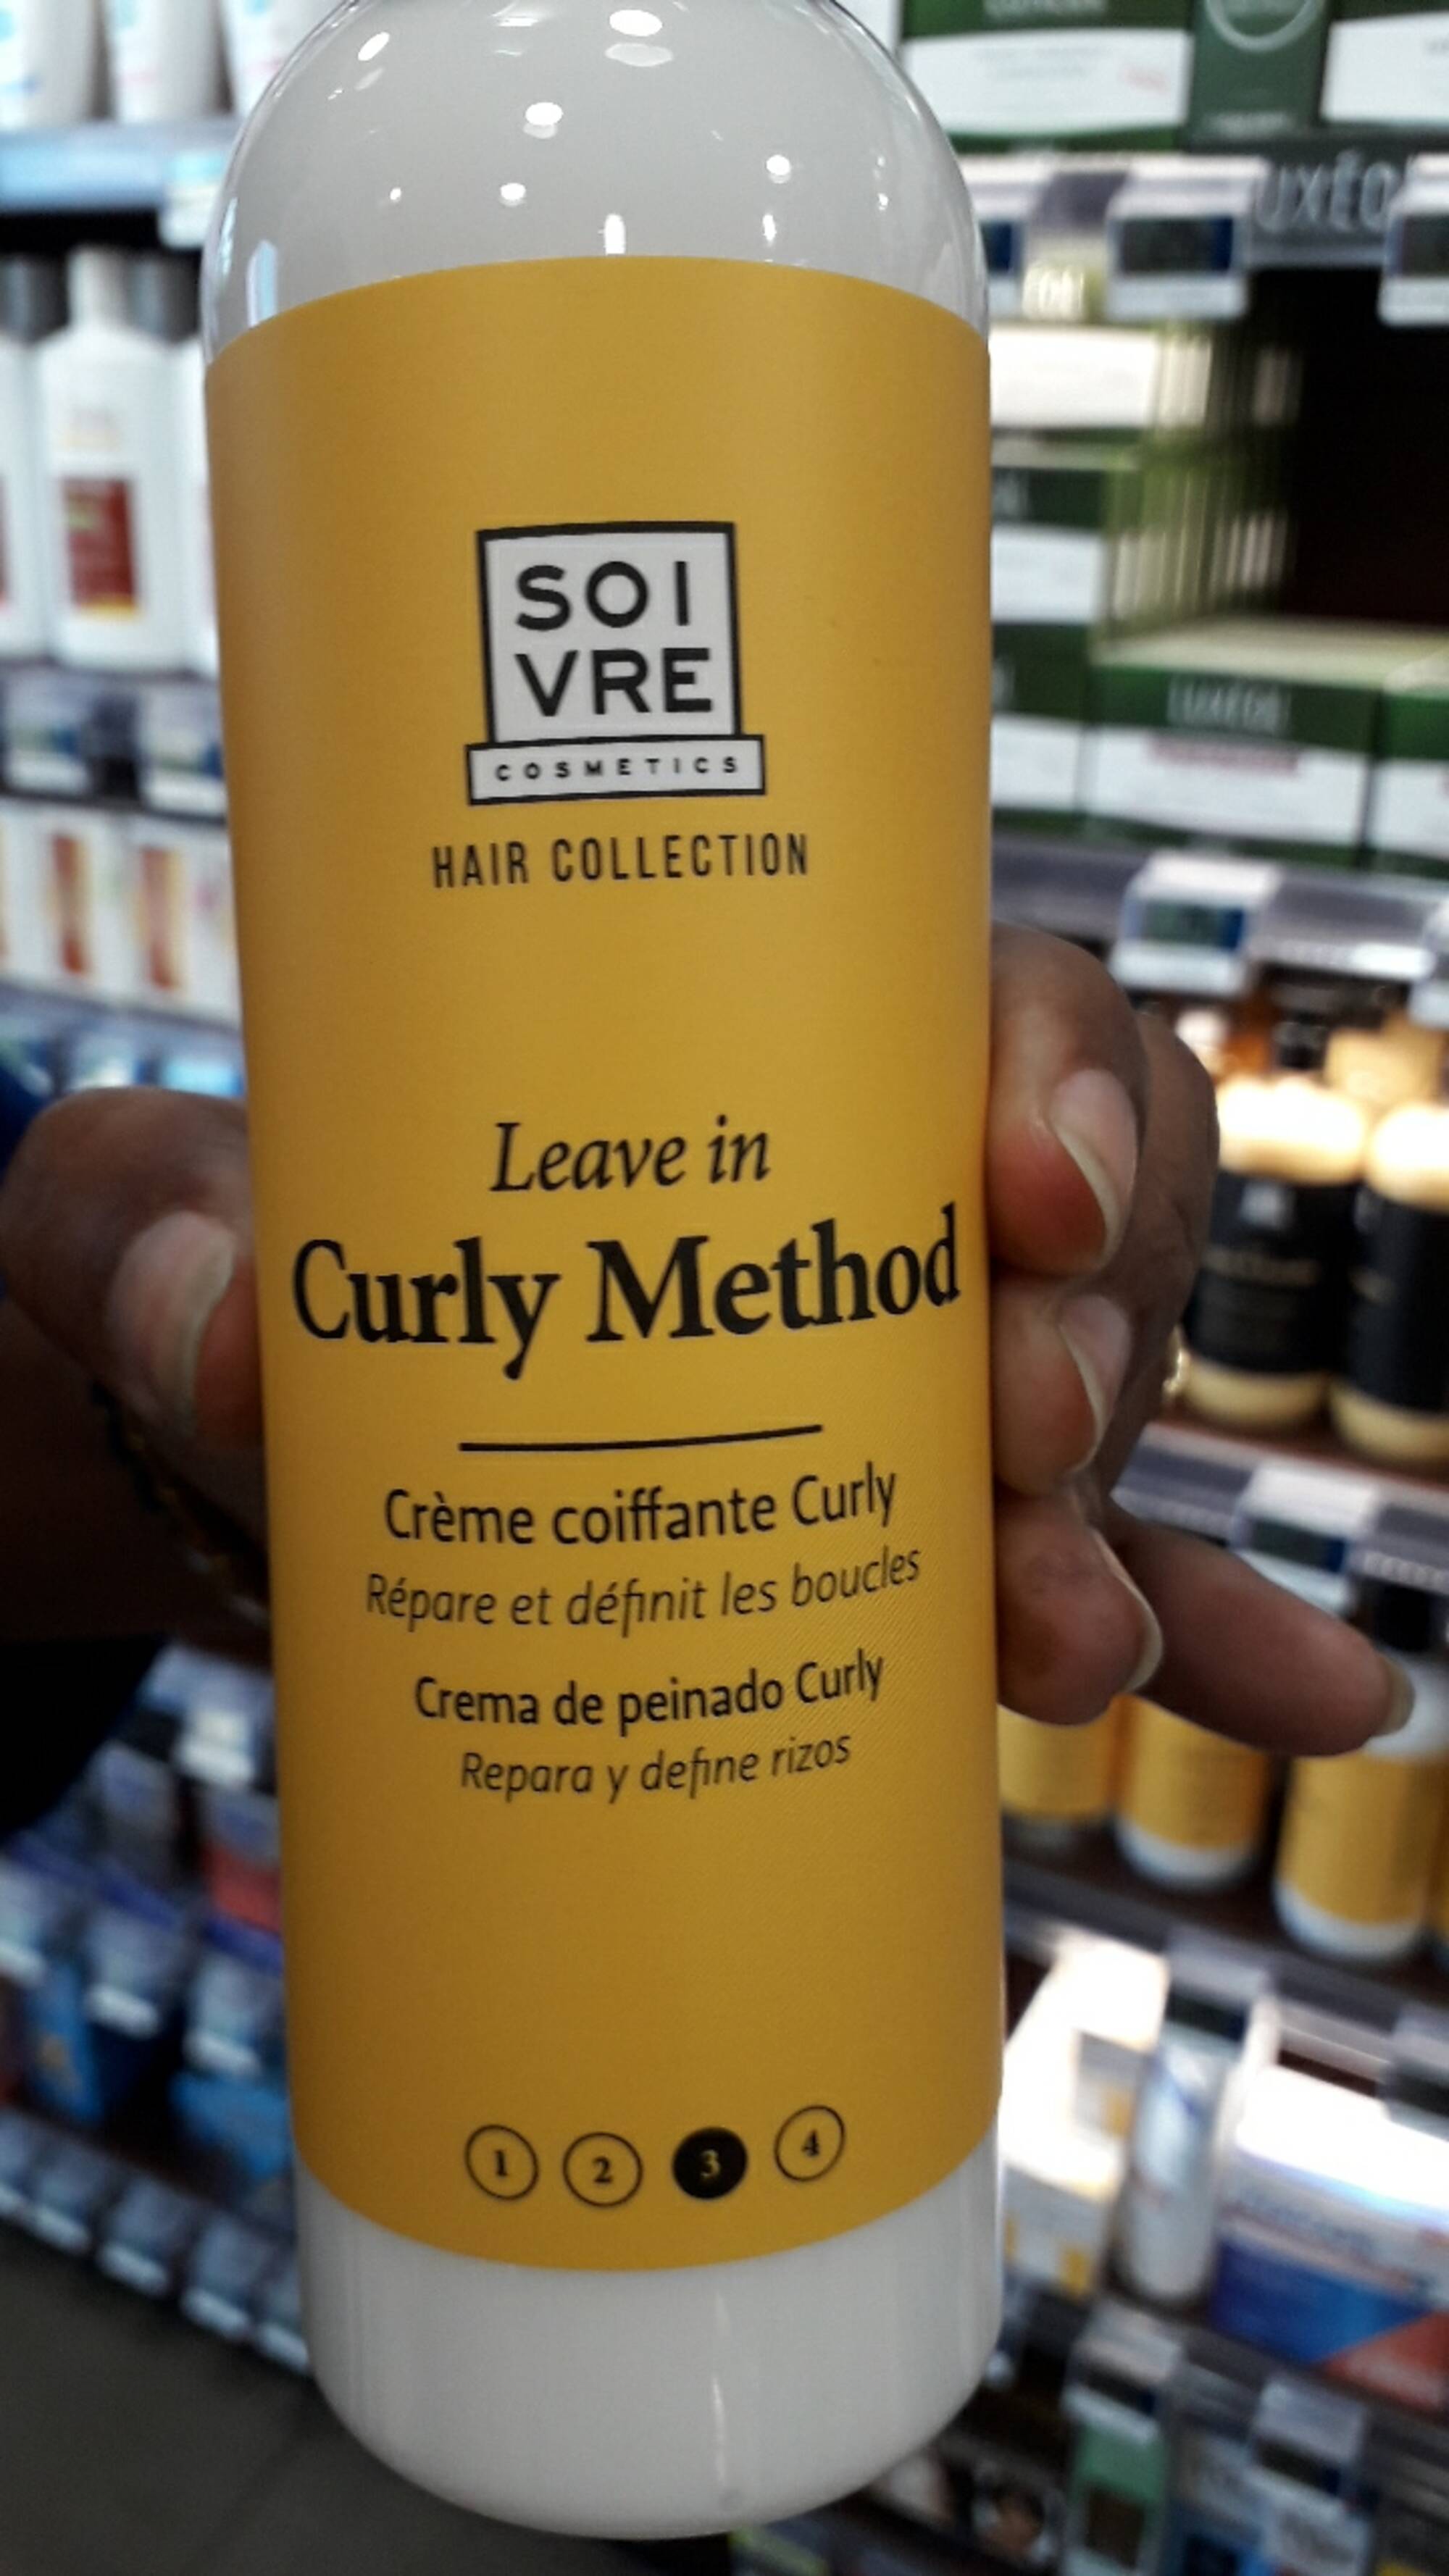 SOIVRE COSMETICS - Crème coiffante curly 3